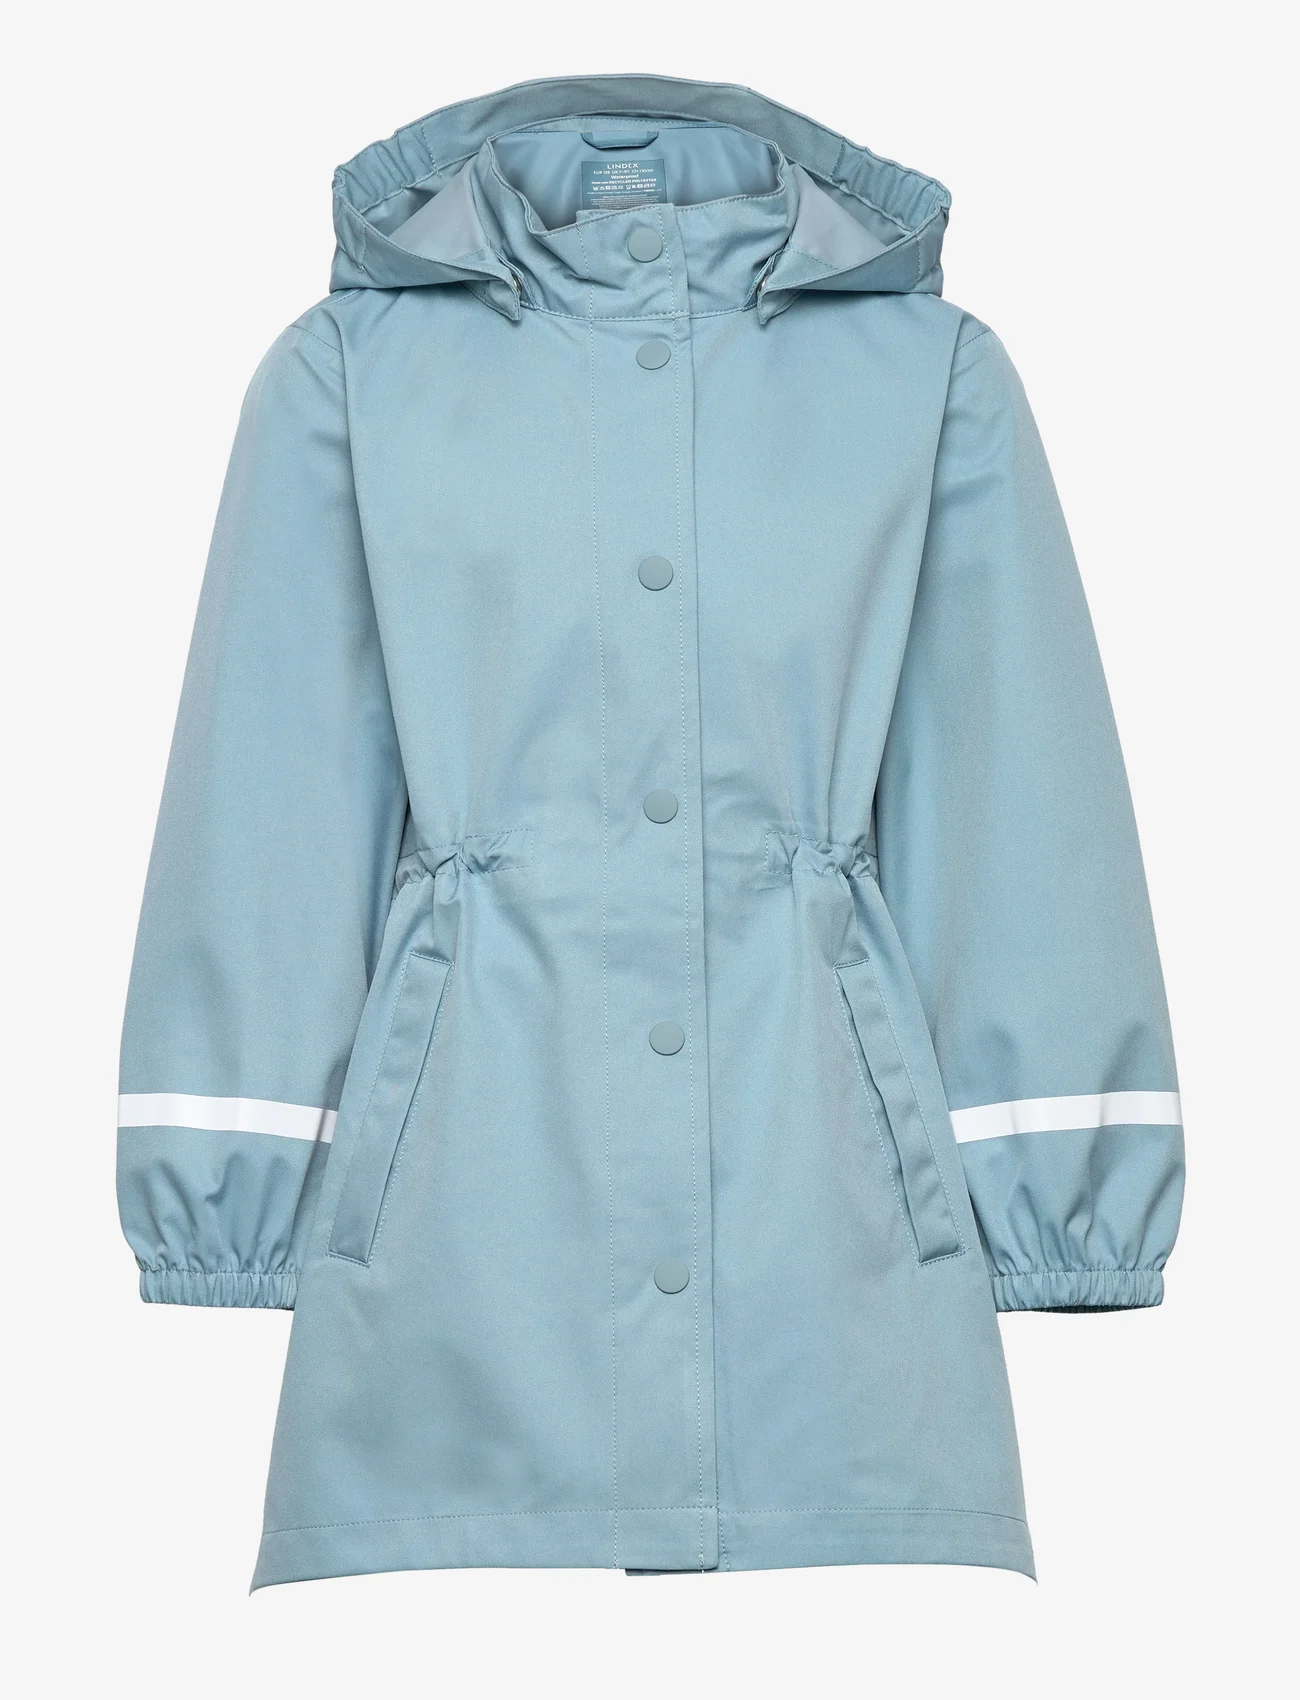 Lindex - Jacket rain coat - regnjackor - dusty blue - 0